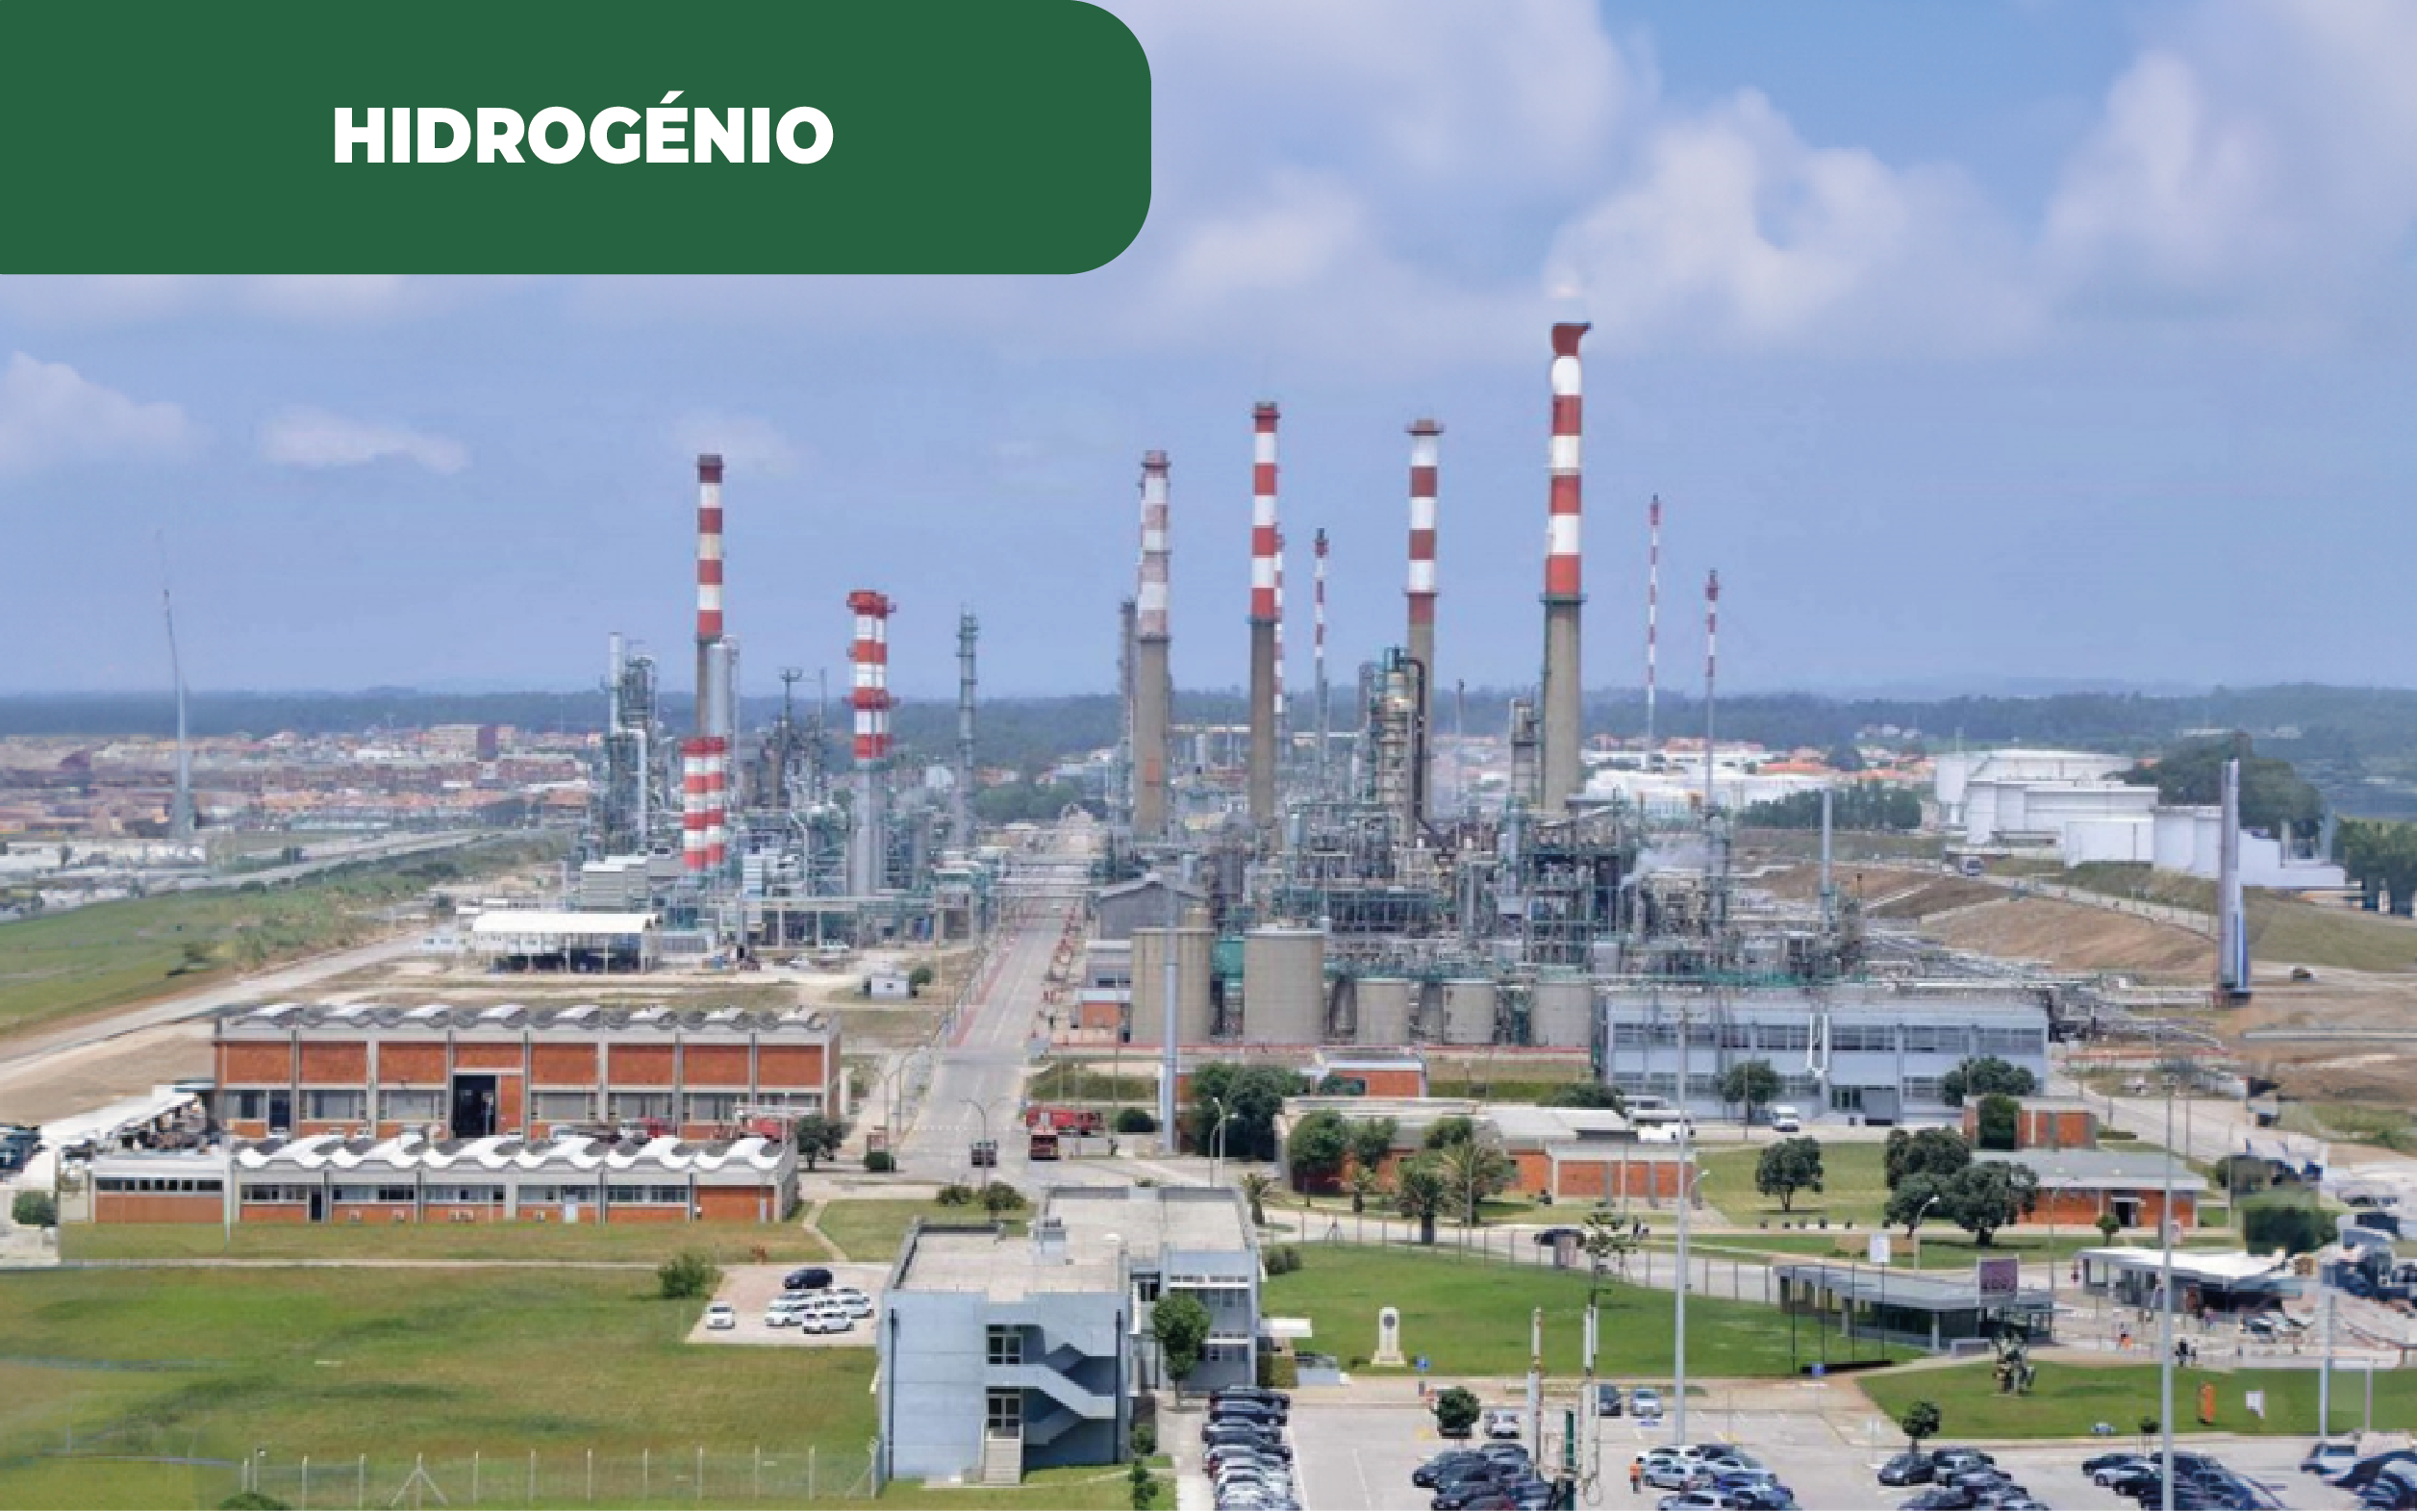 Fotografia aérea da zona industrial da refinaria de Sines, onde a Galp estuda investimento de hidrogénio